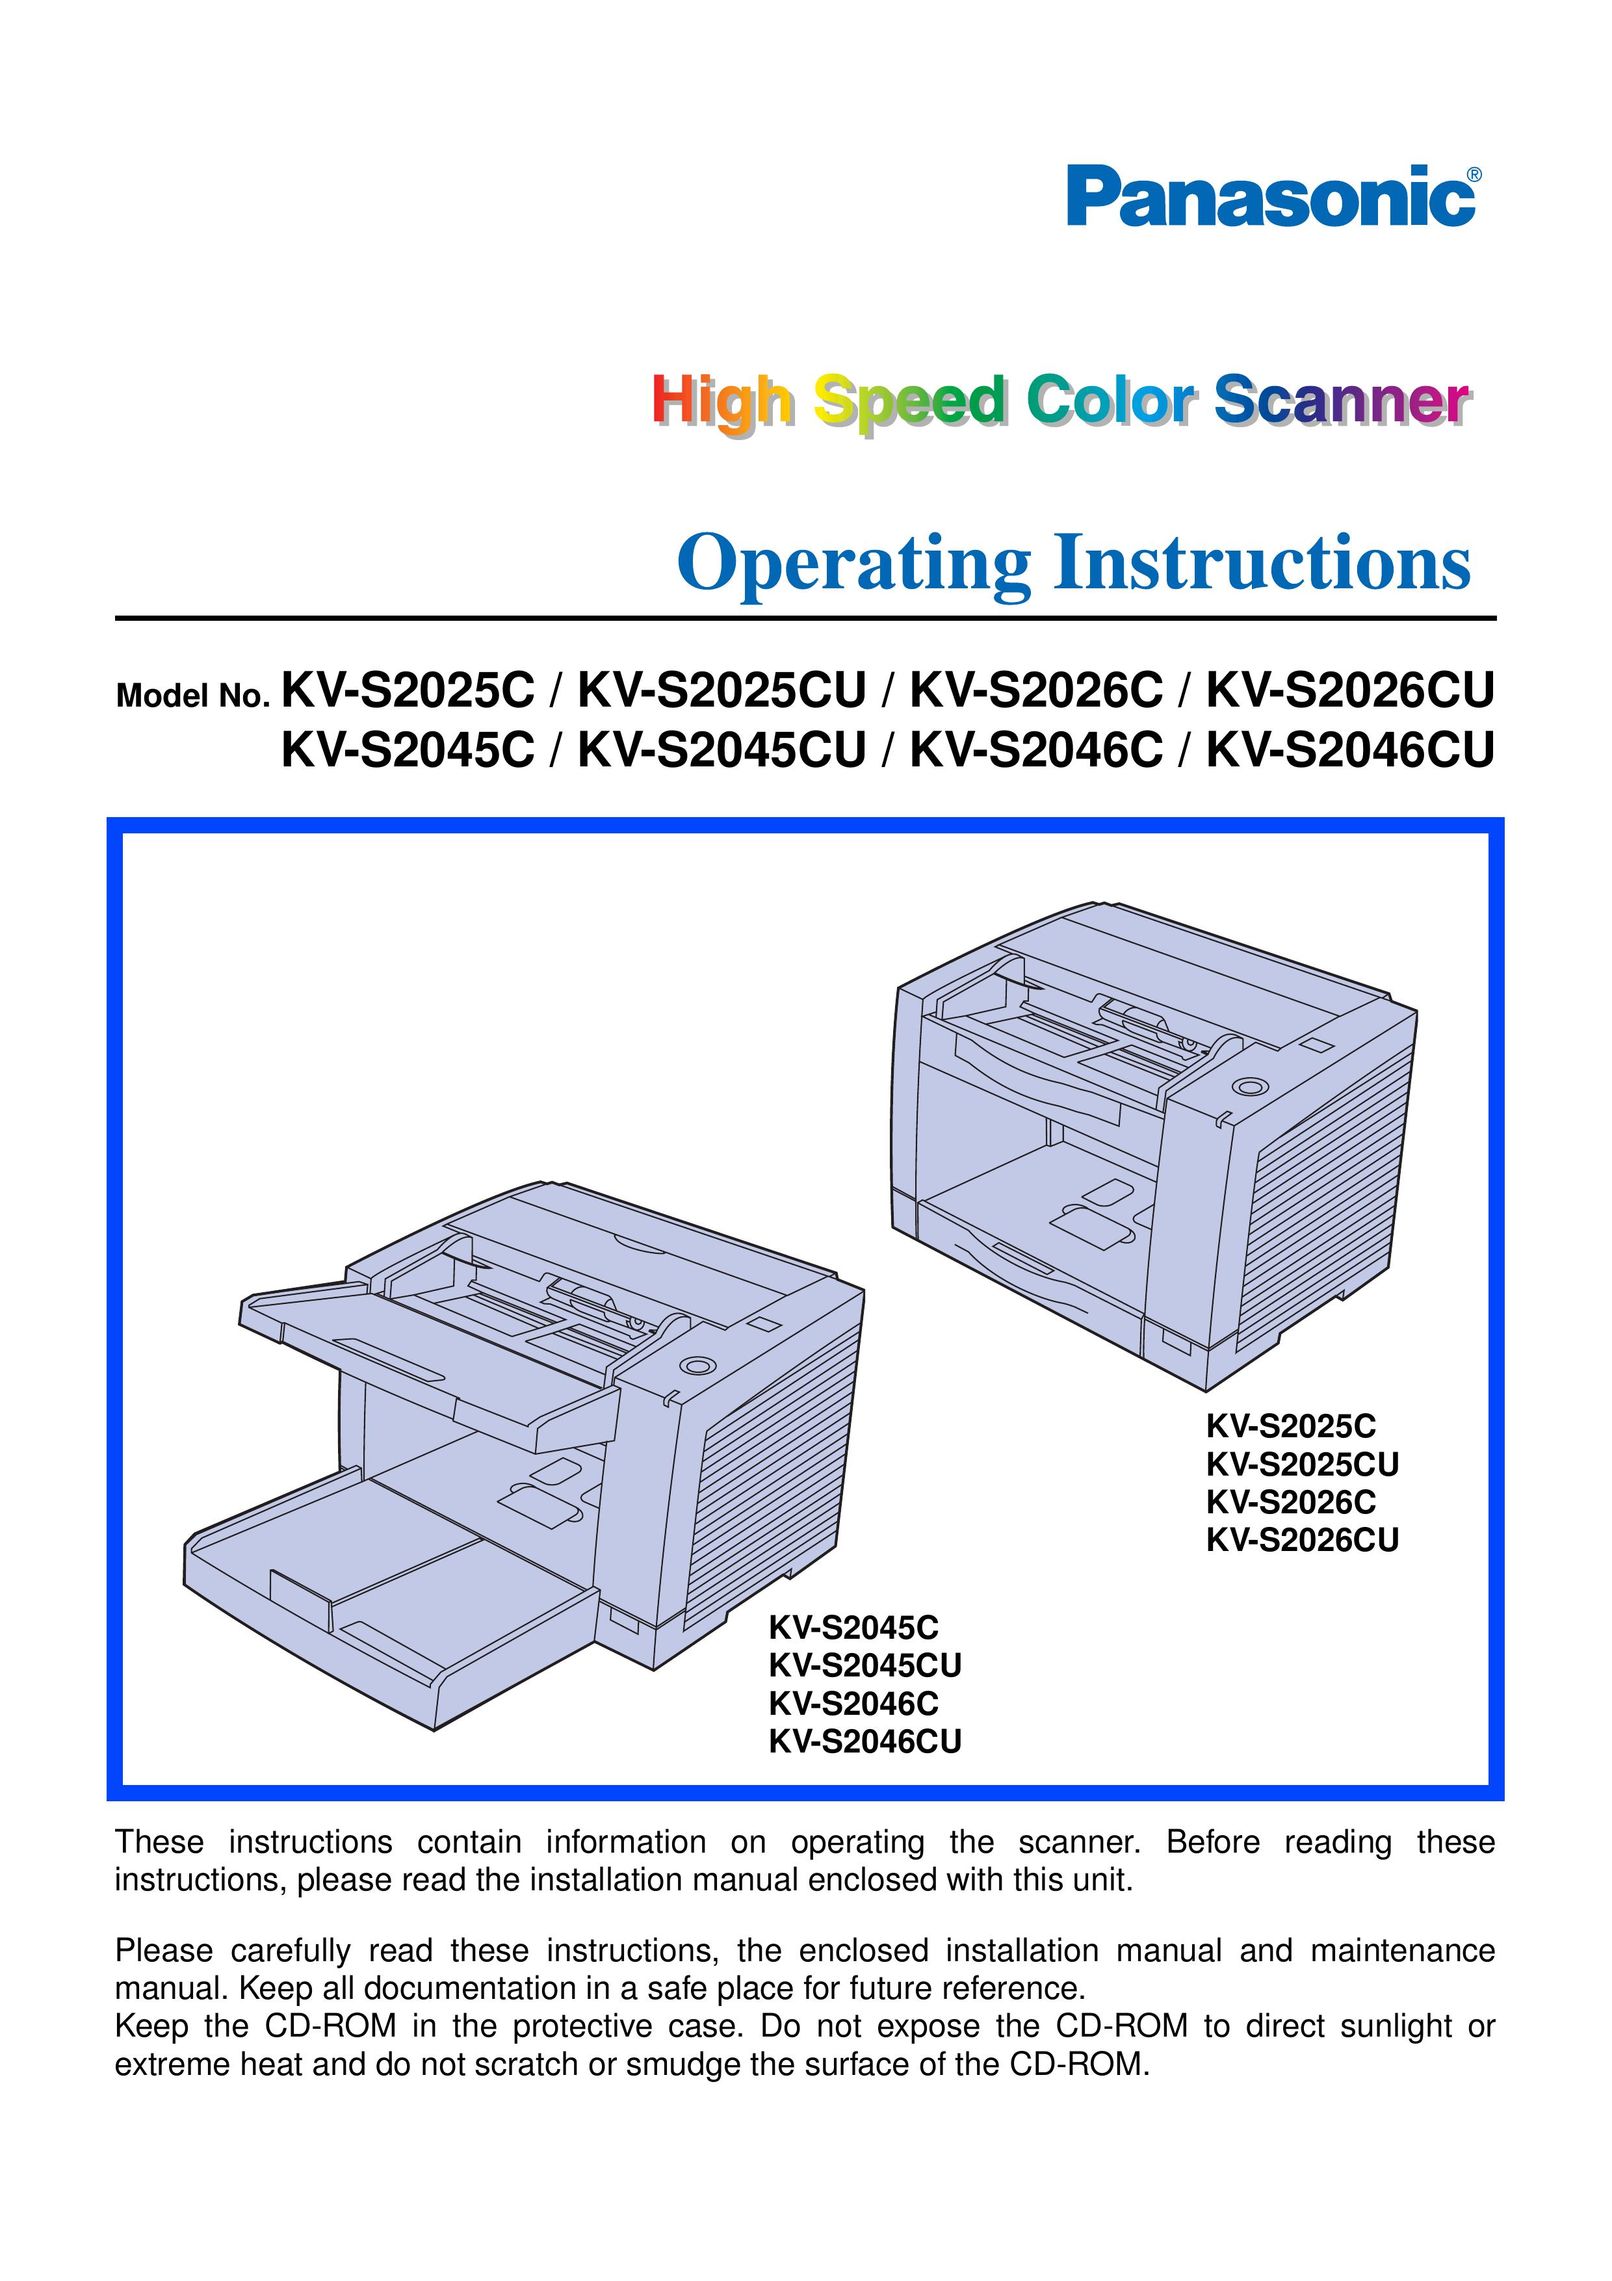 Panasonic KV-S2026C Scanner User Manual